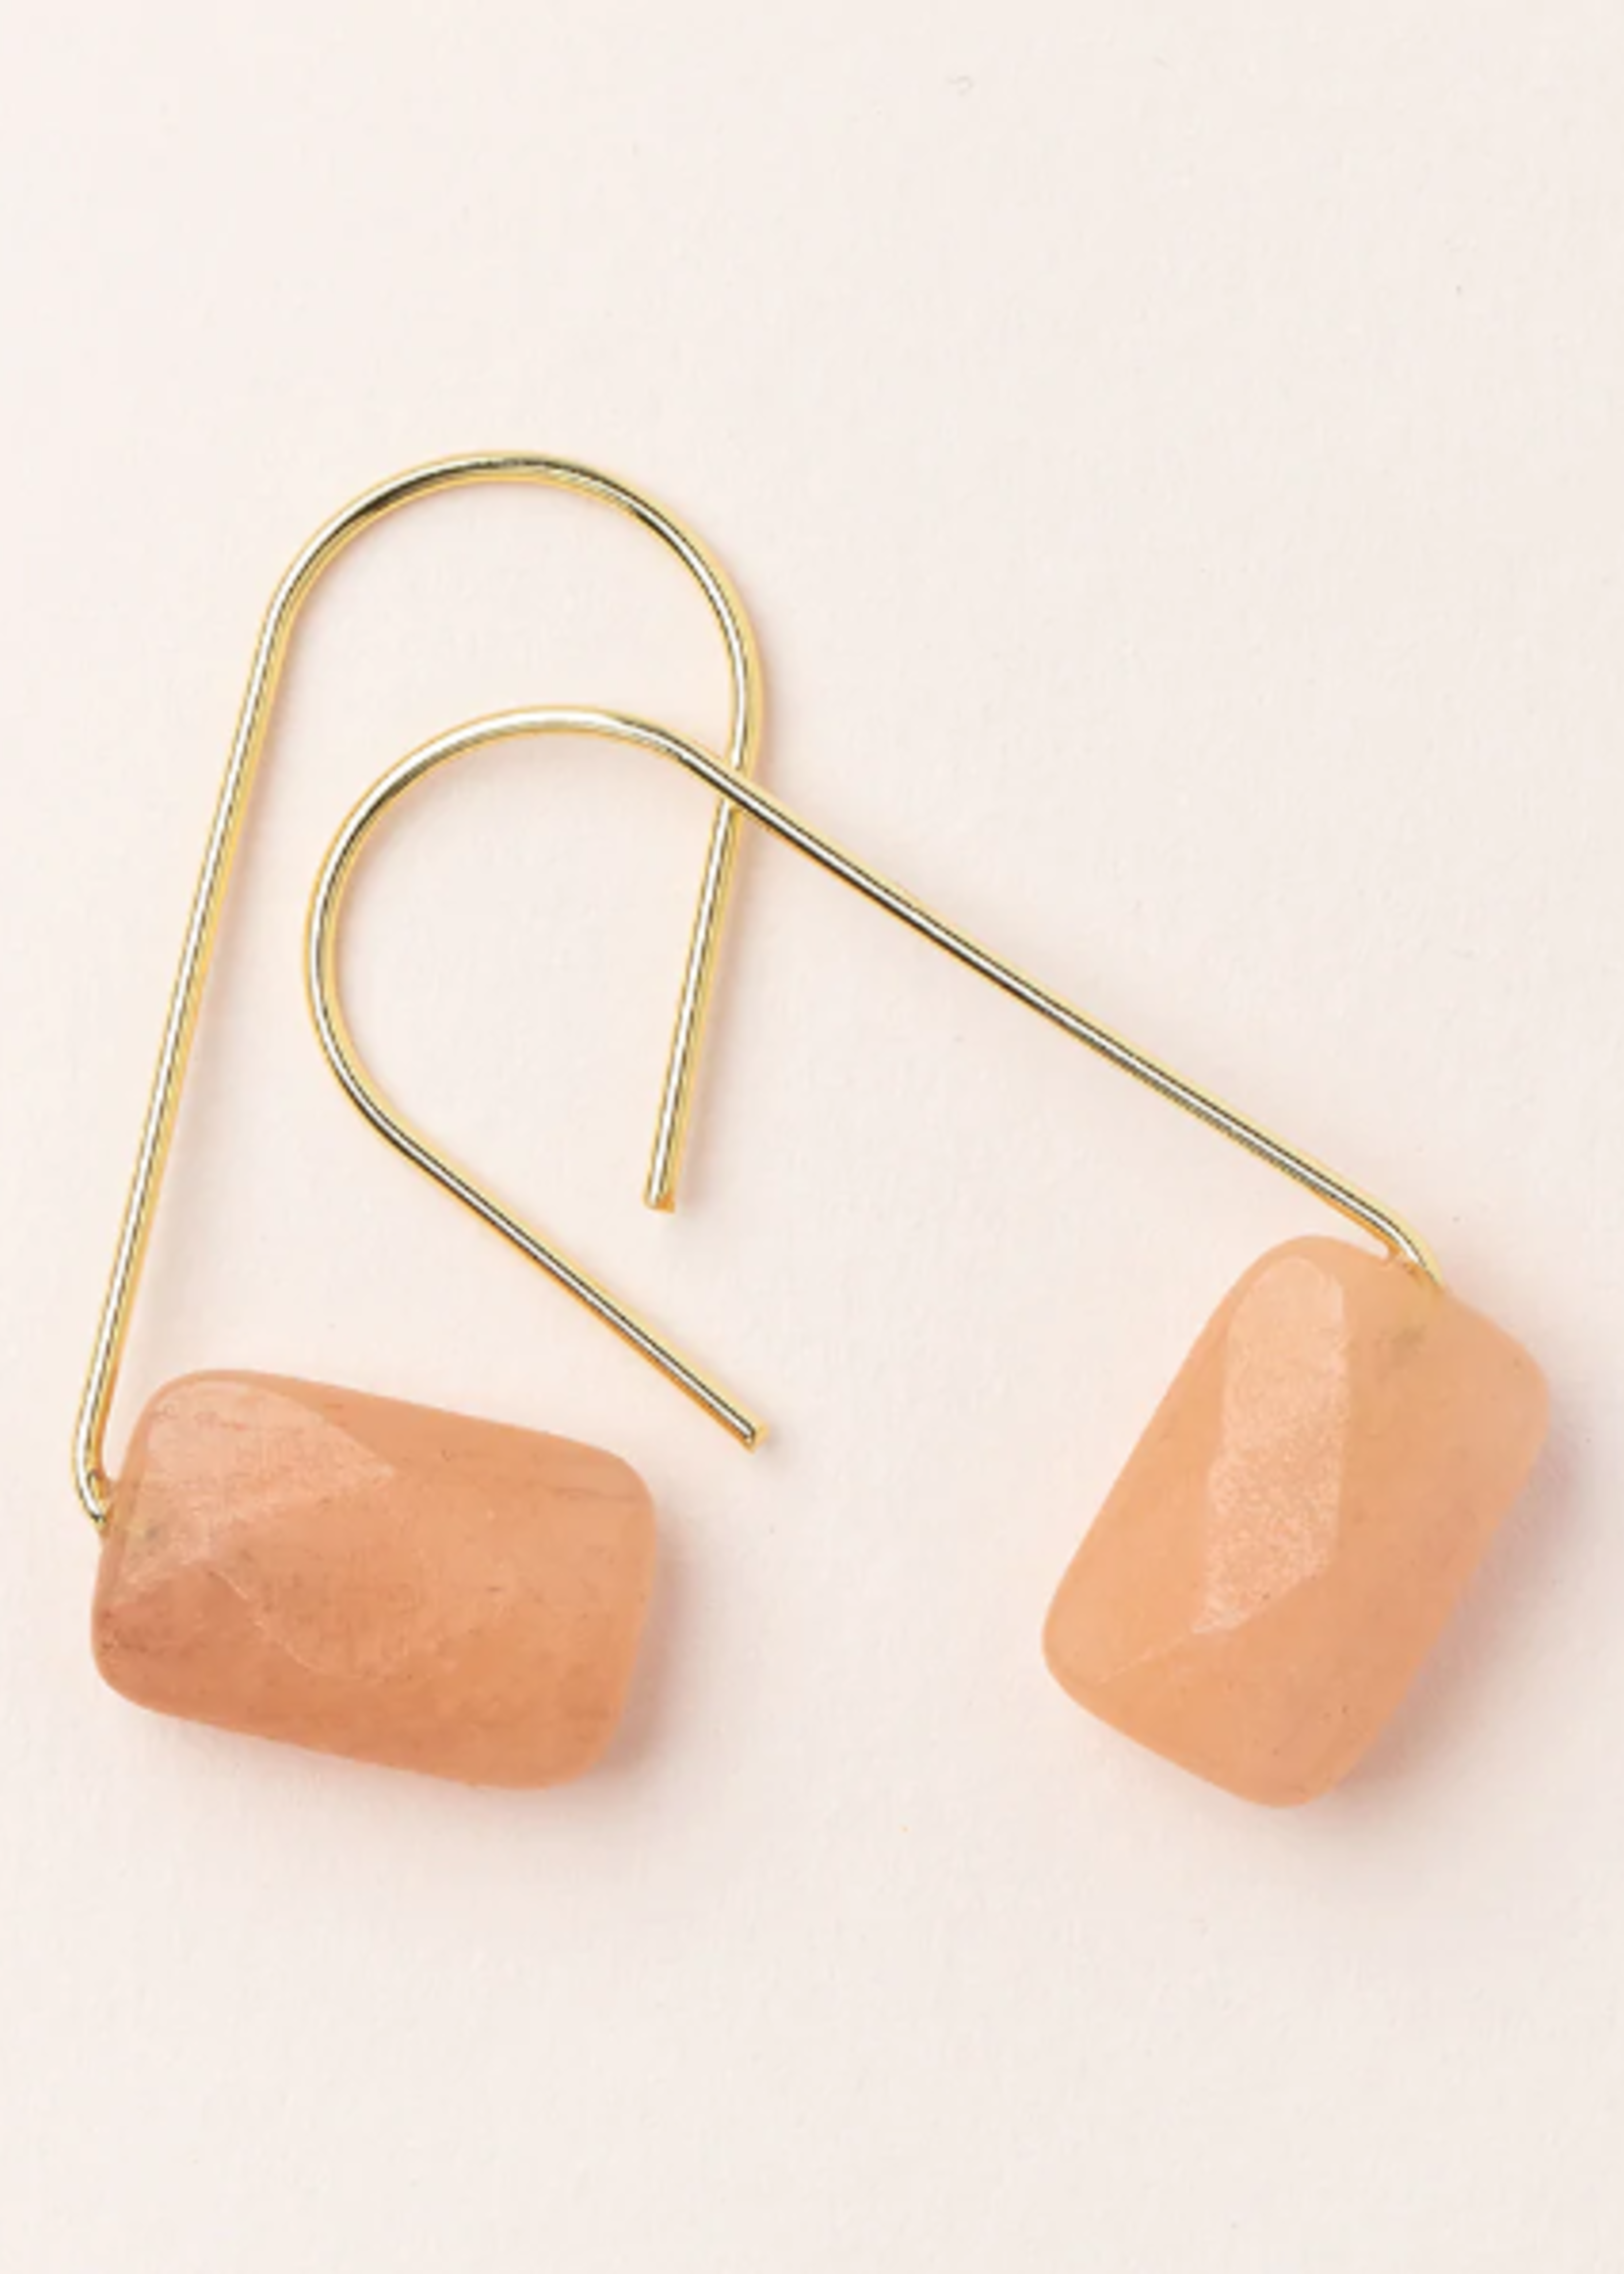 Floating Stone Earring - SunStone/Gold